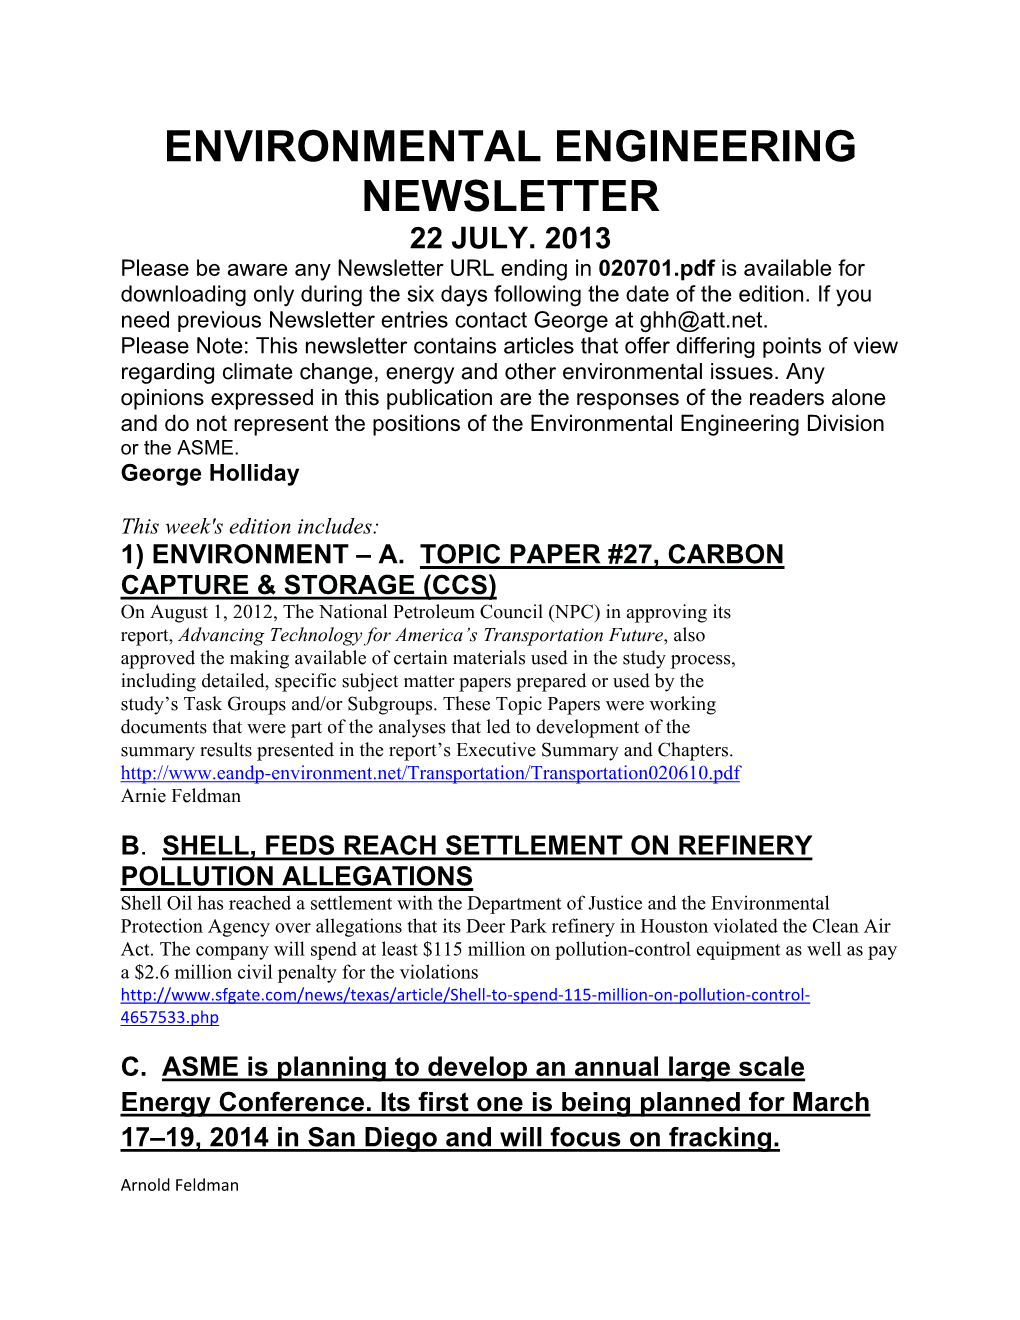 Environmental Engineering Newsletter 22 July